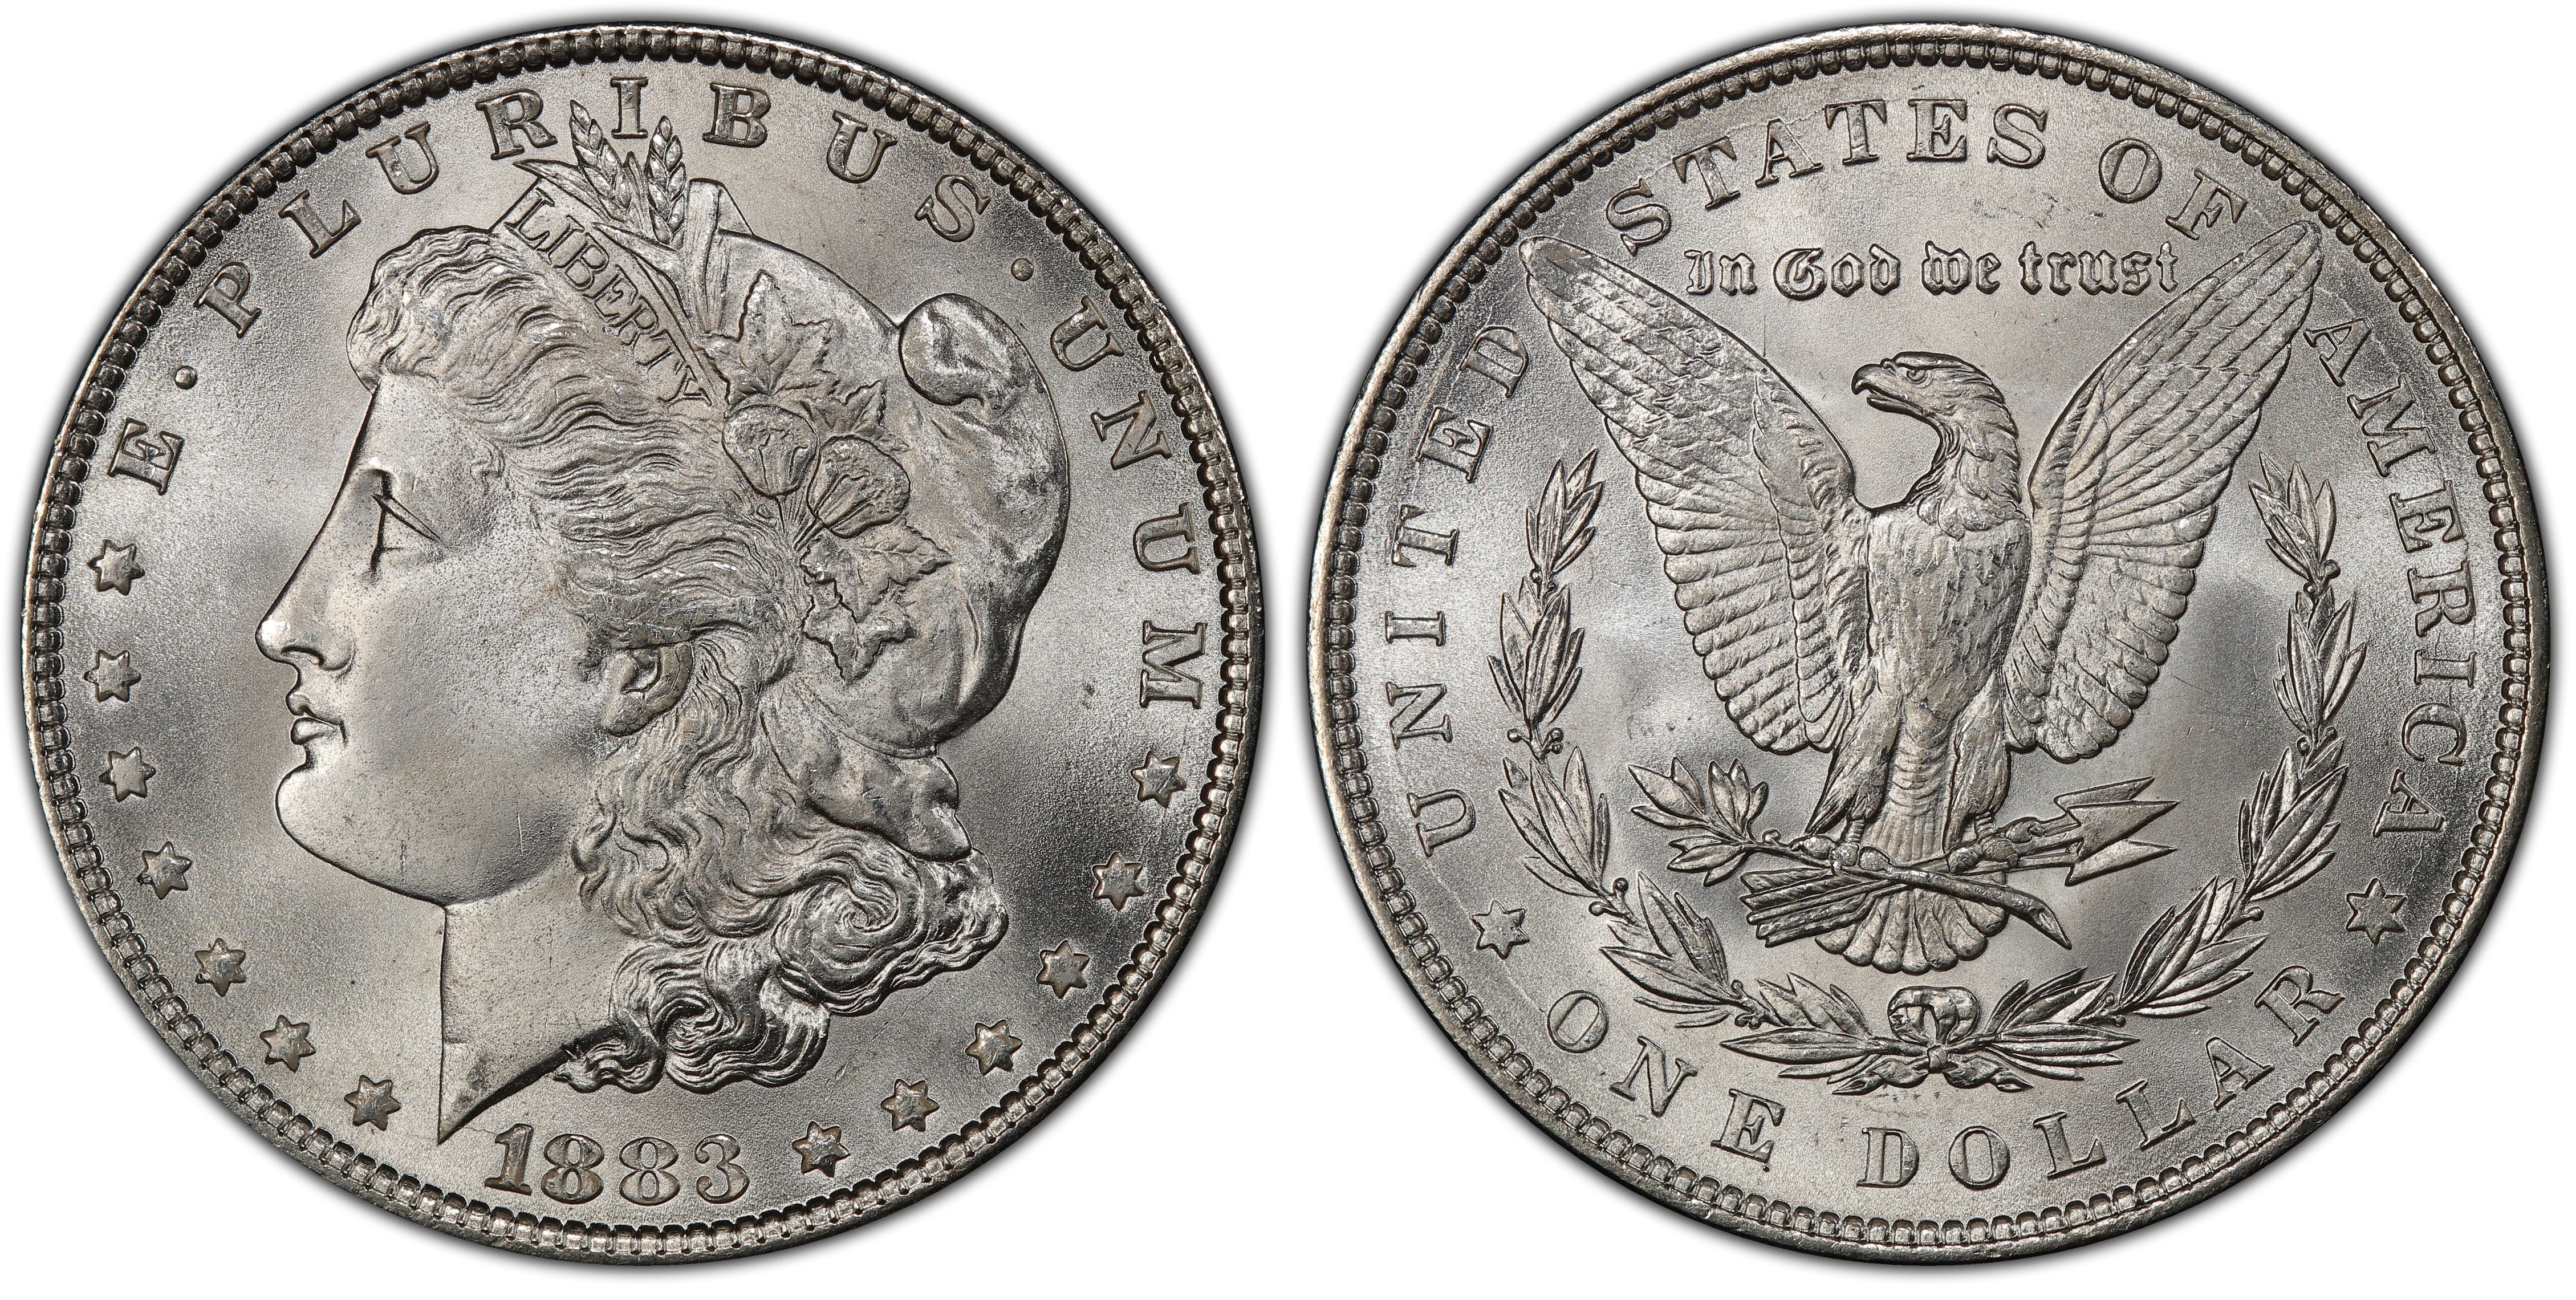 1883 $1 (Regular Strike) Morgan Dollar - PCGS CoinFacts